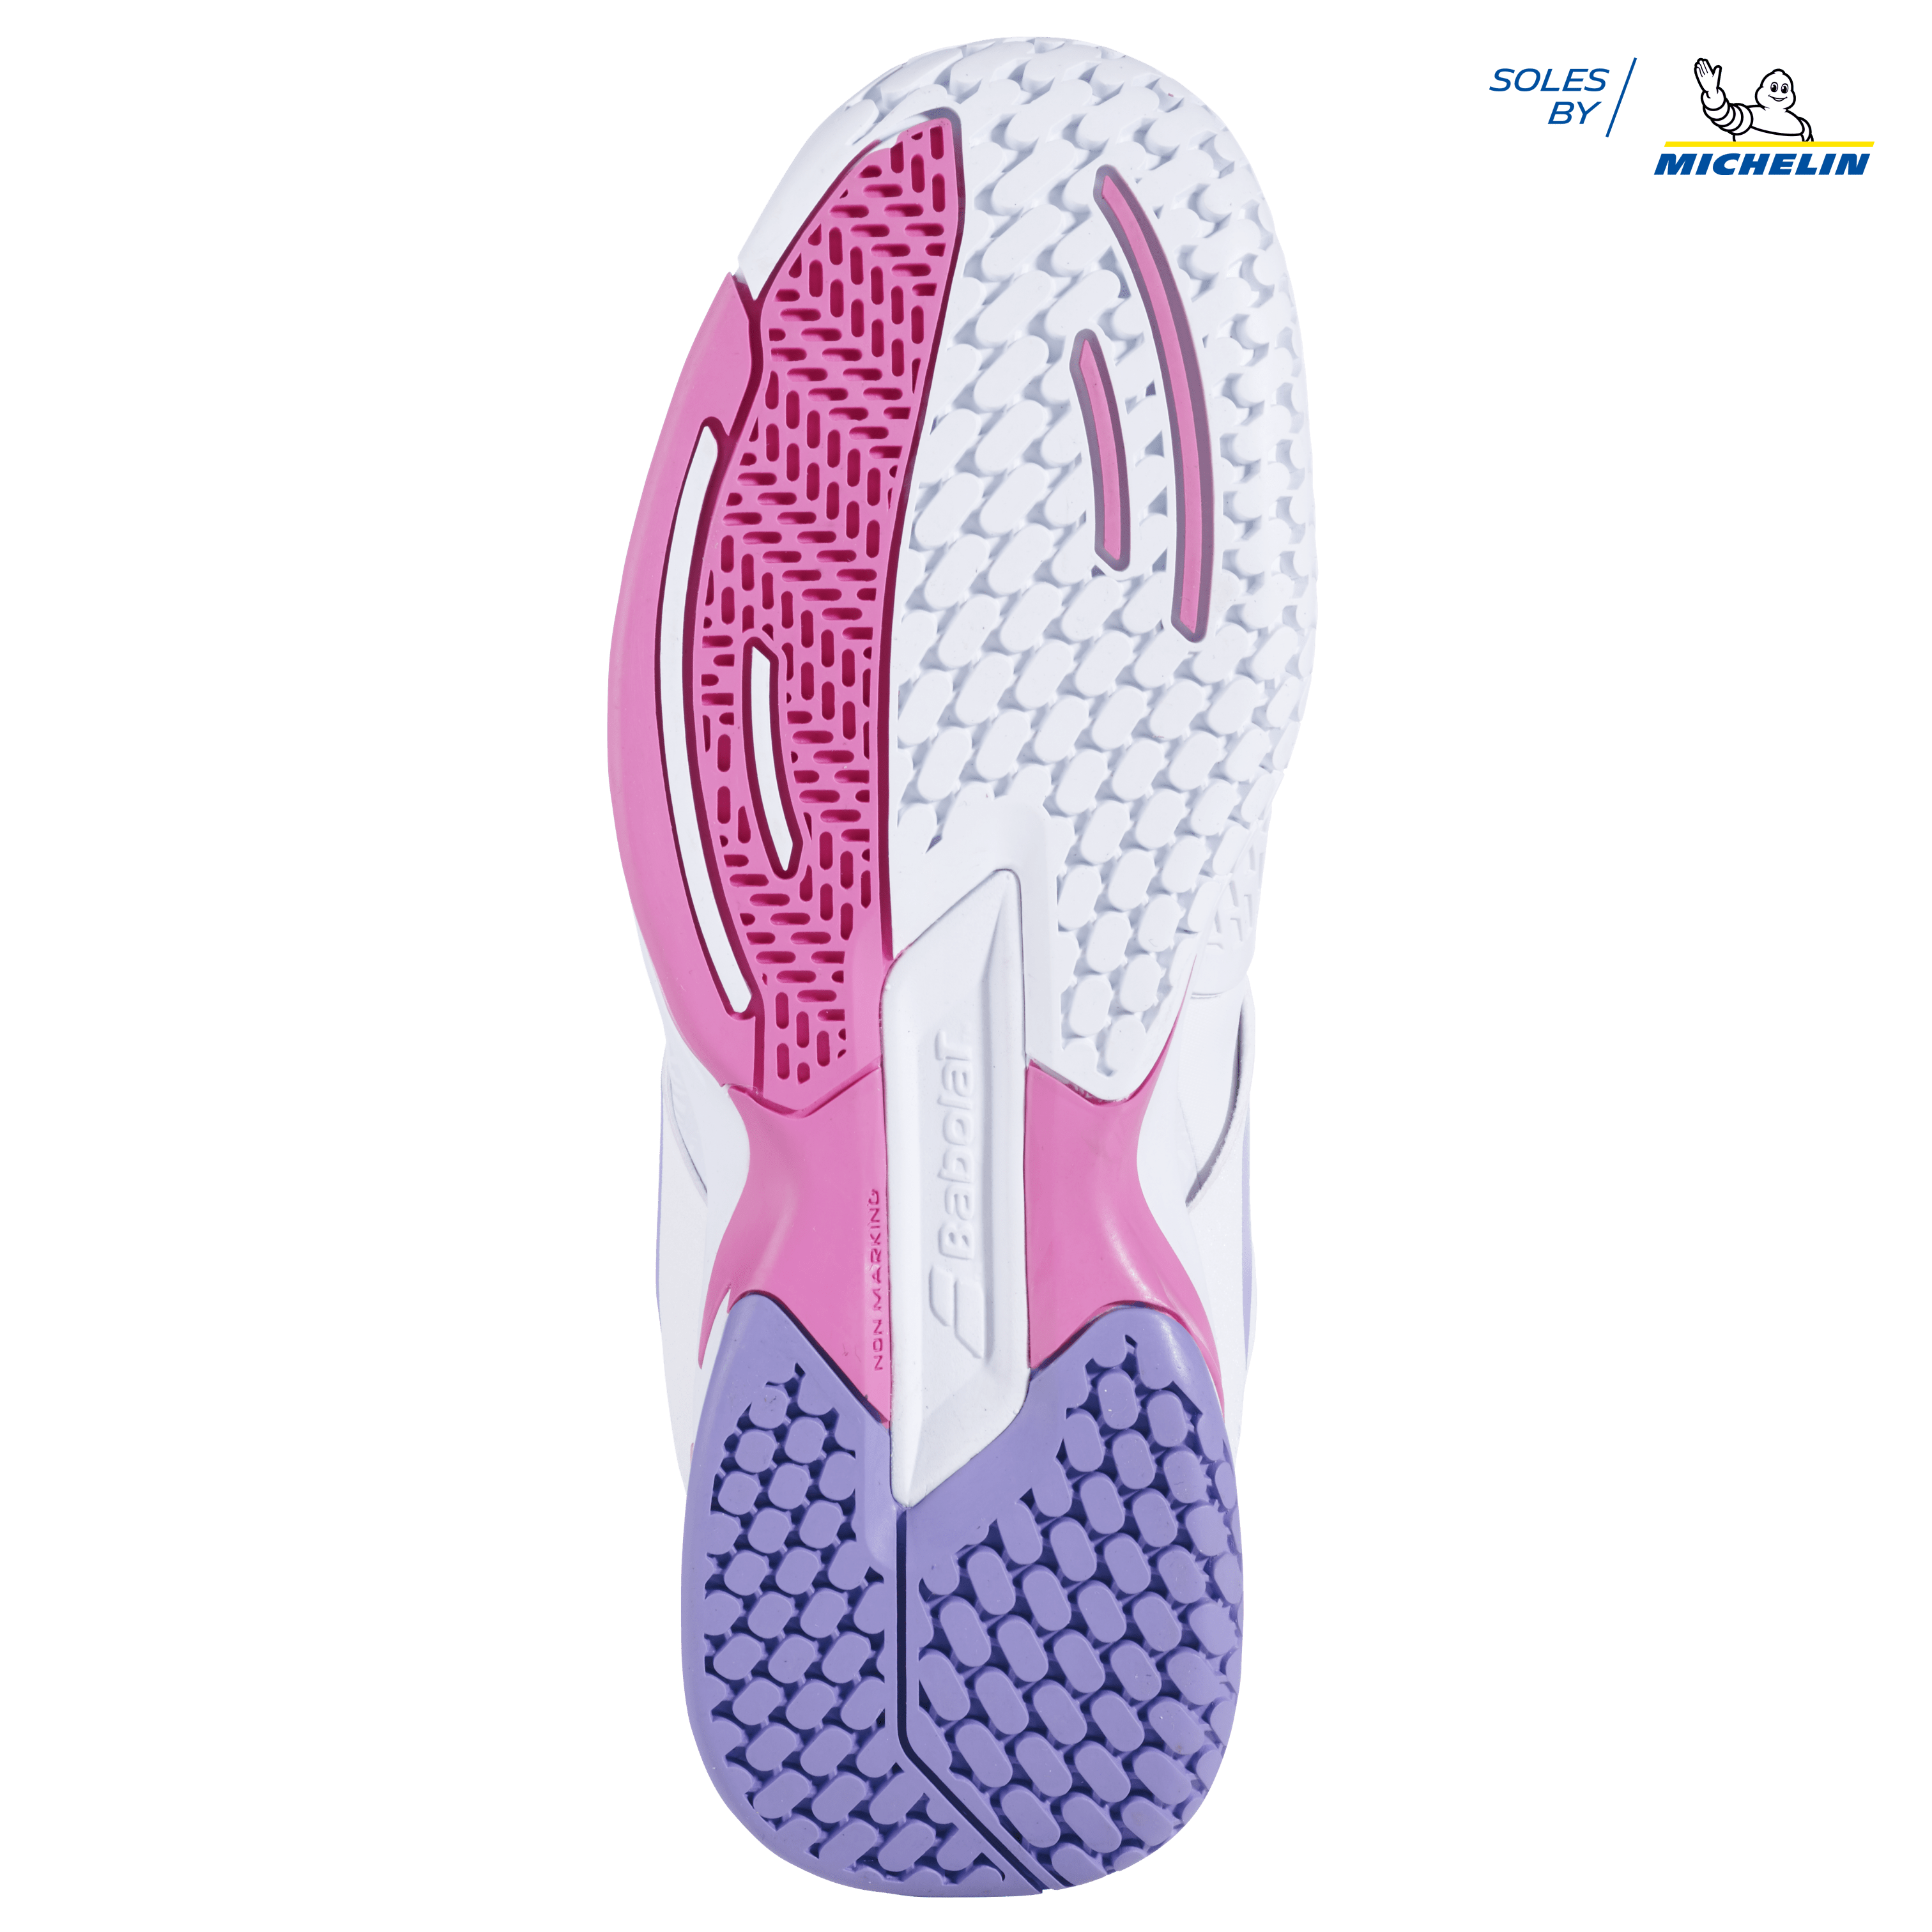 Babolat Propulse Fury All Court Women's Tennis Shoes Ladies